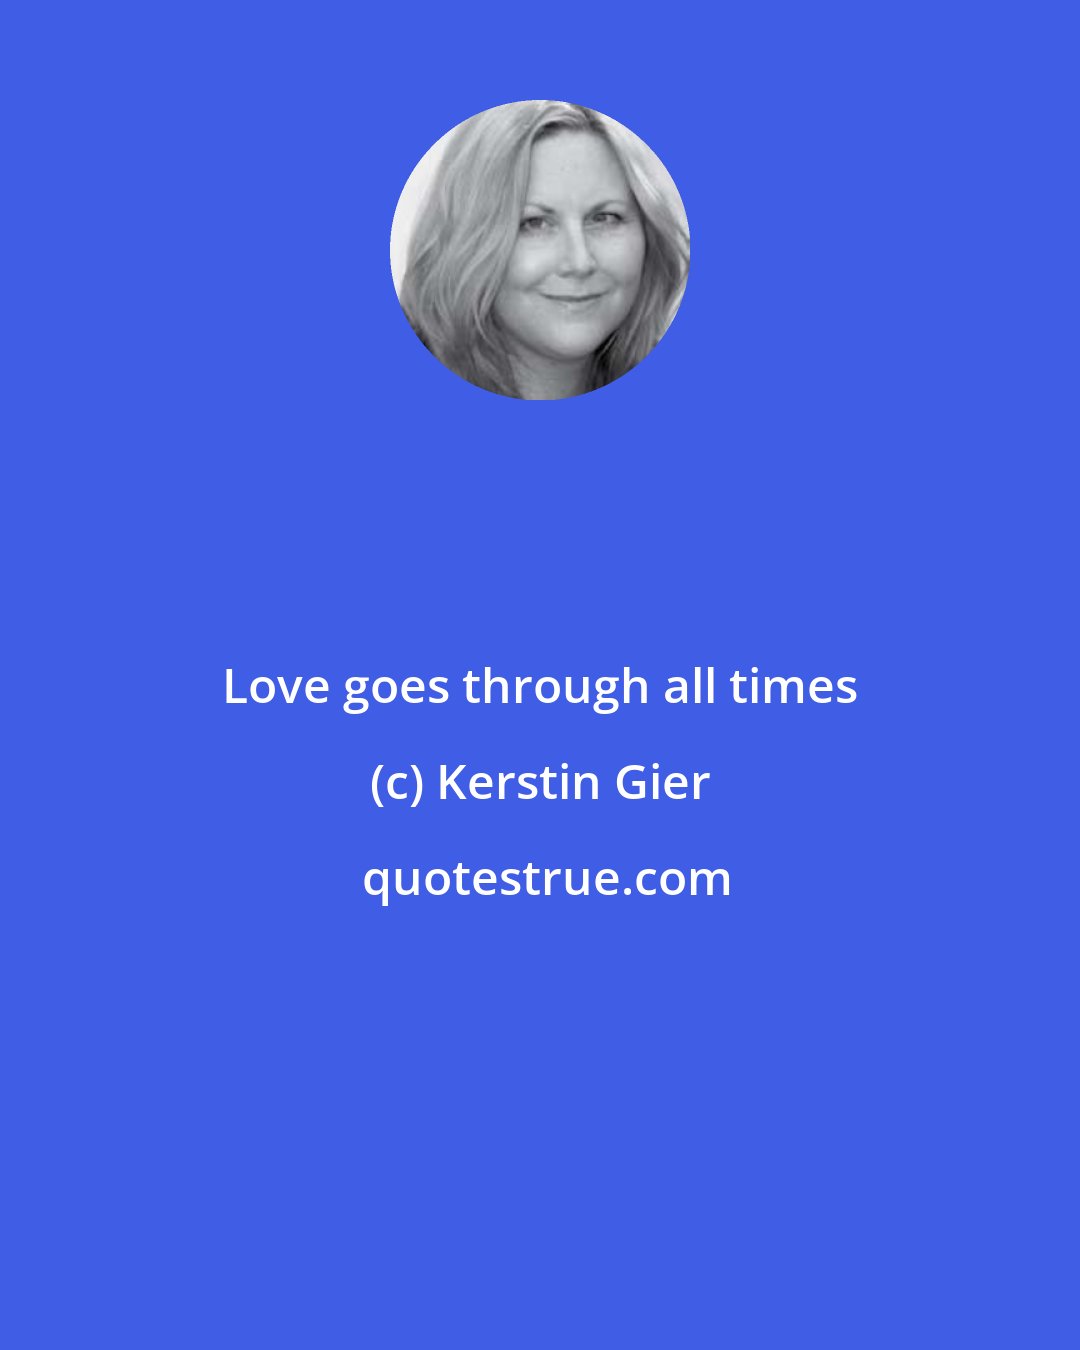 Kerstin Gier: Love goes through all times